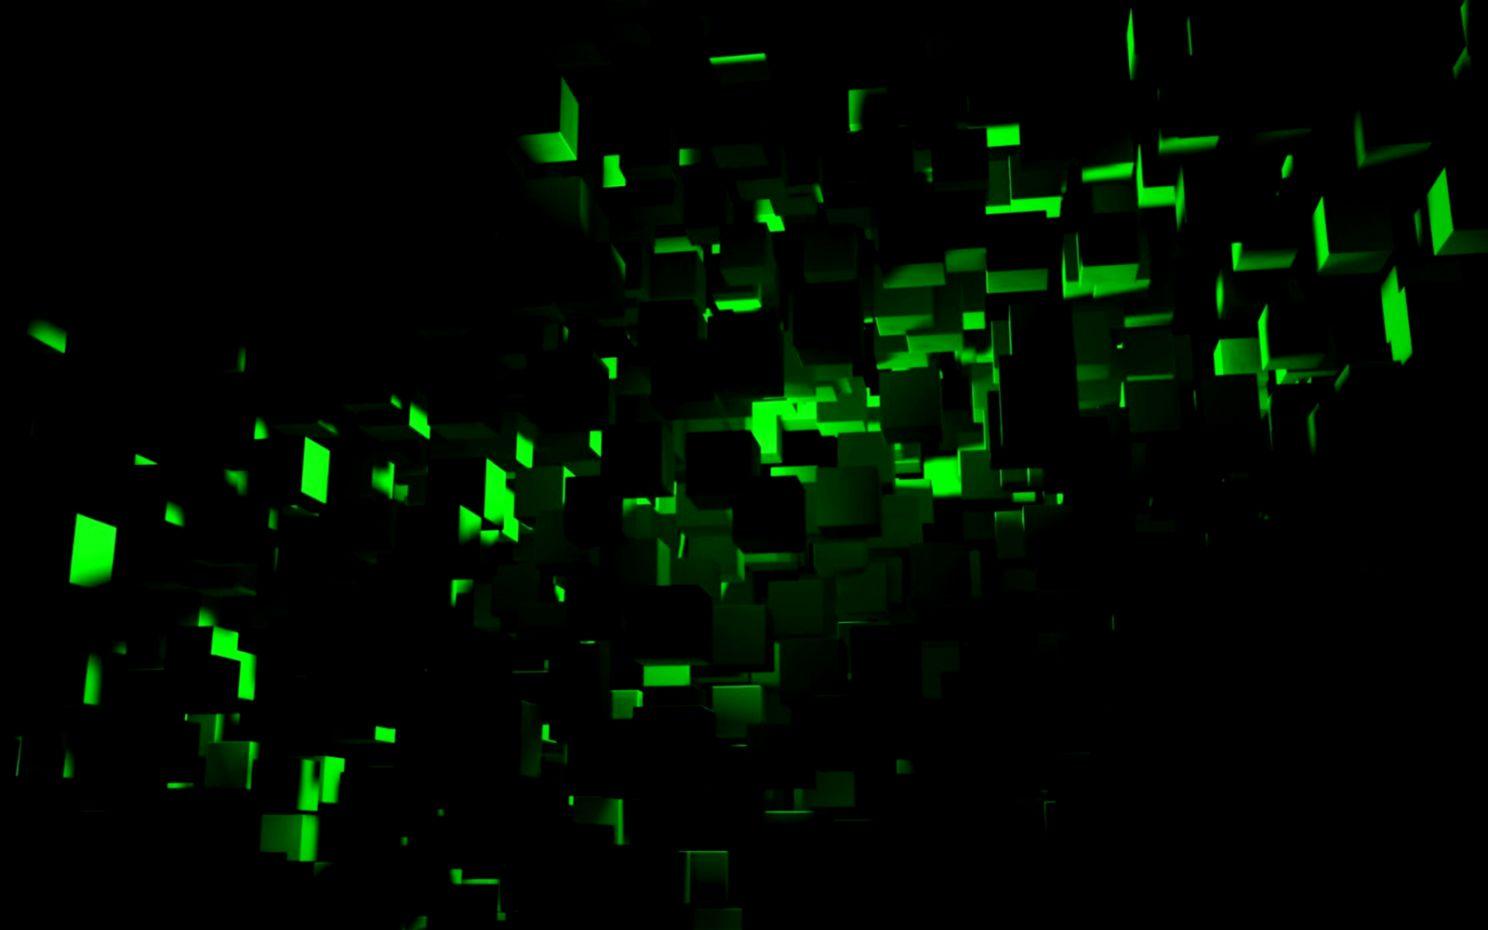 Dark Green Abstract Wallpapers - Top Free Dark Green Abstract